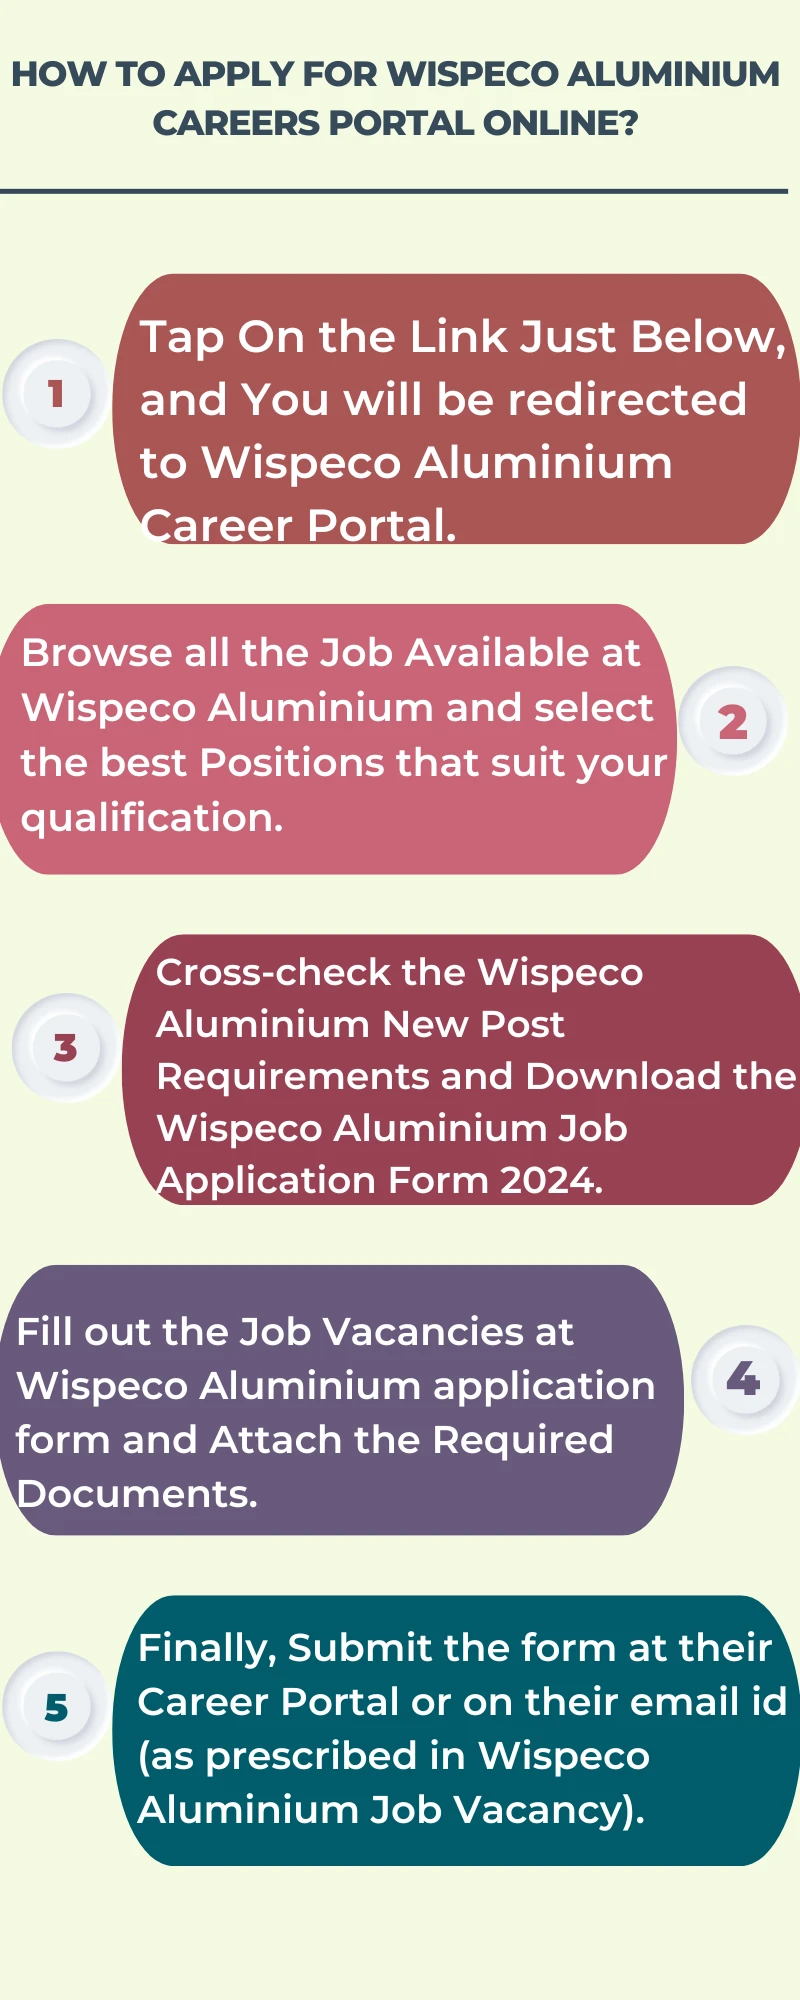 How To Apply for Wispeco Aluminium Careers Portal Online?